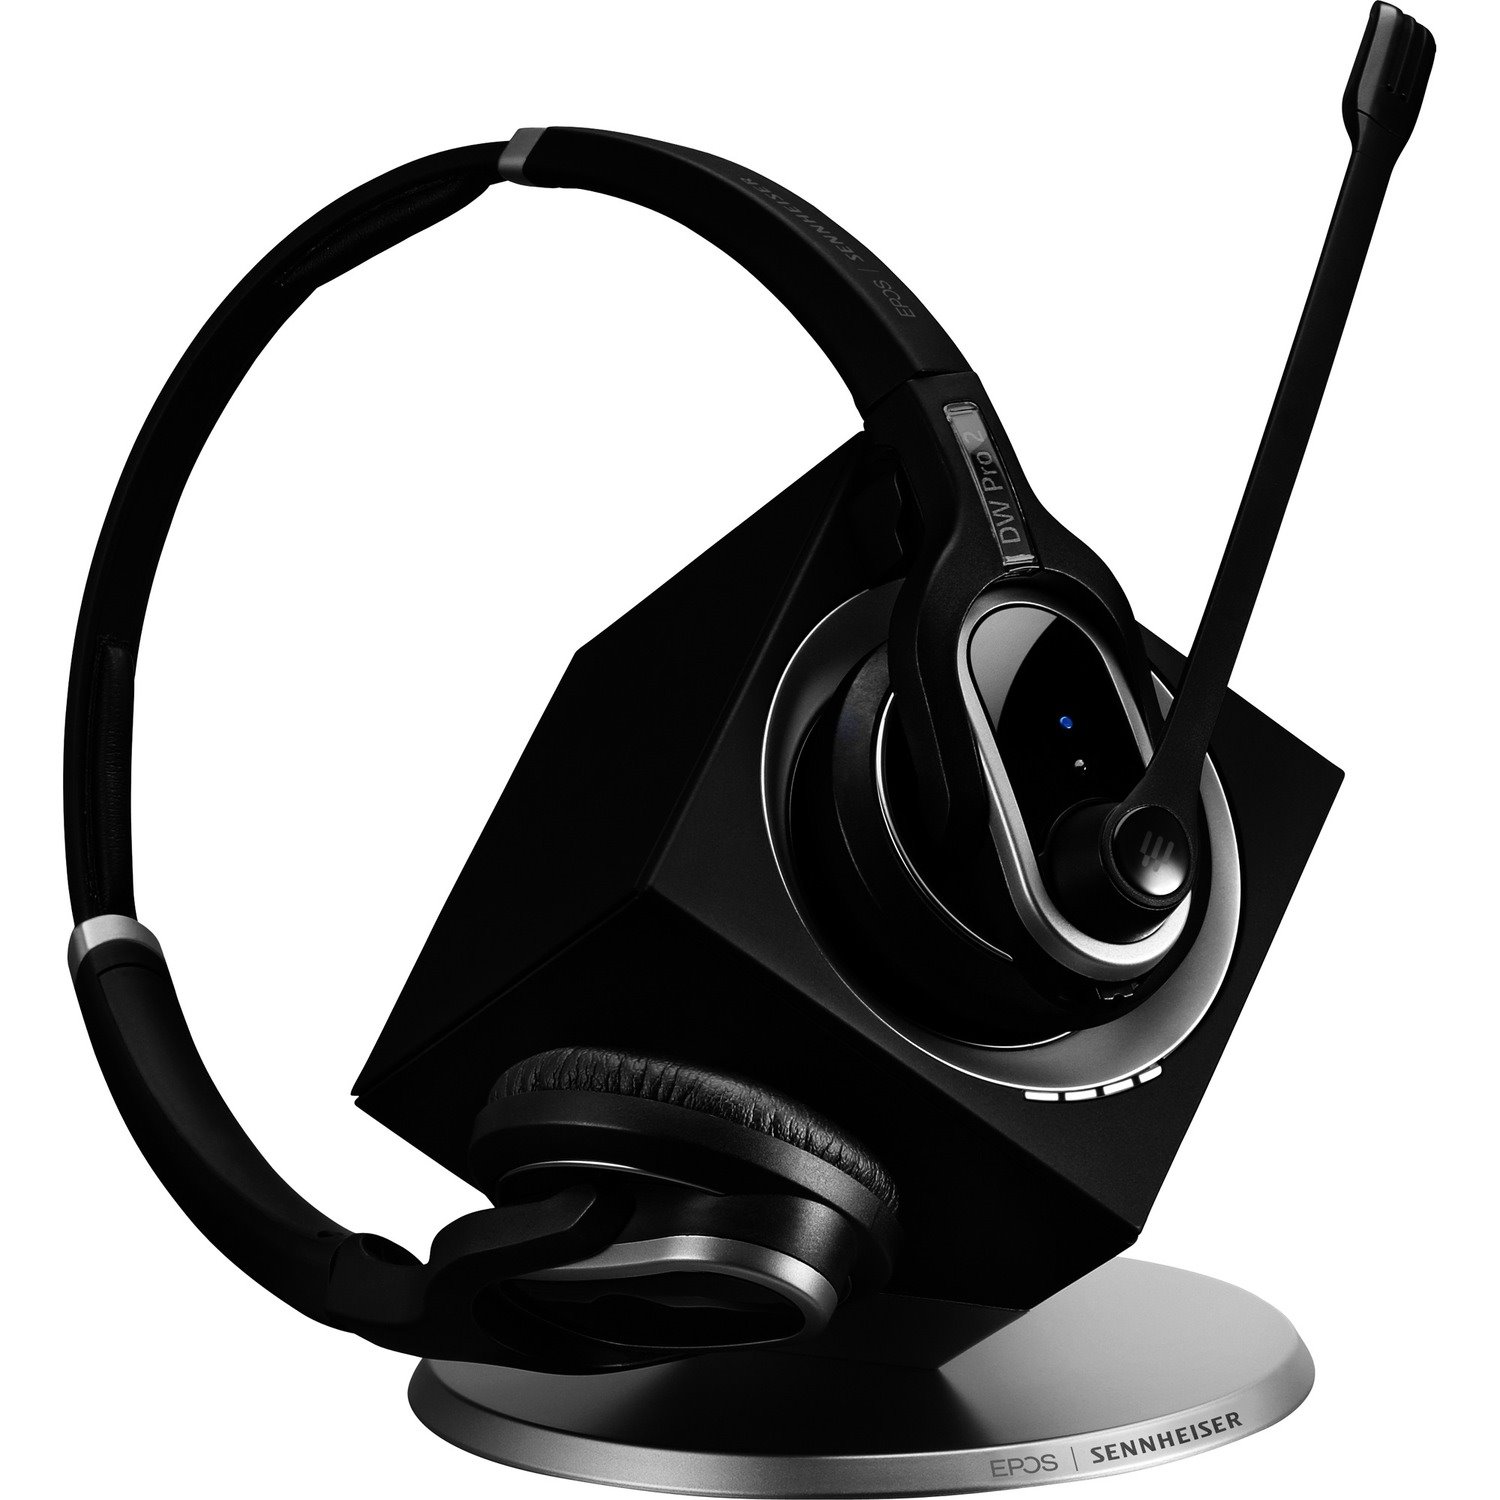 EPOS | SENNHEISER IMPACT Wireless On-ear Stereo Headset - Black